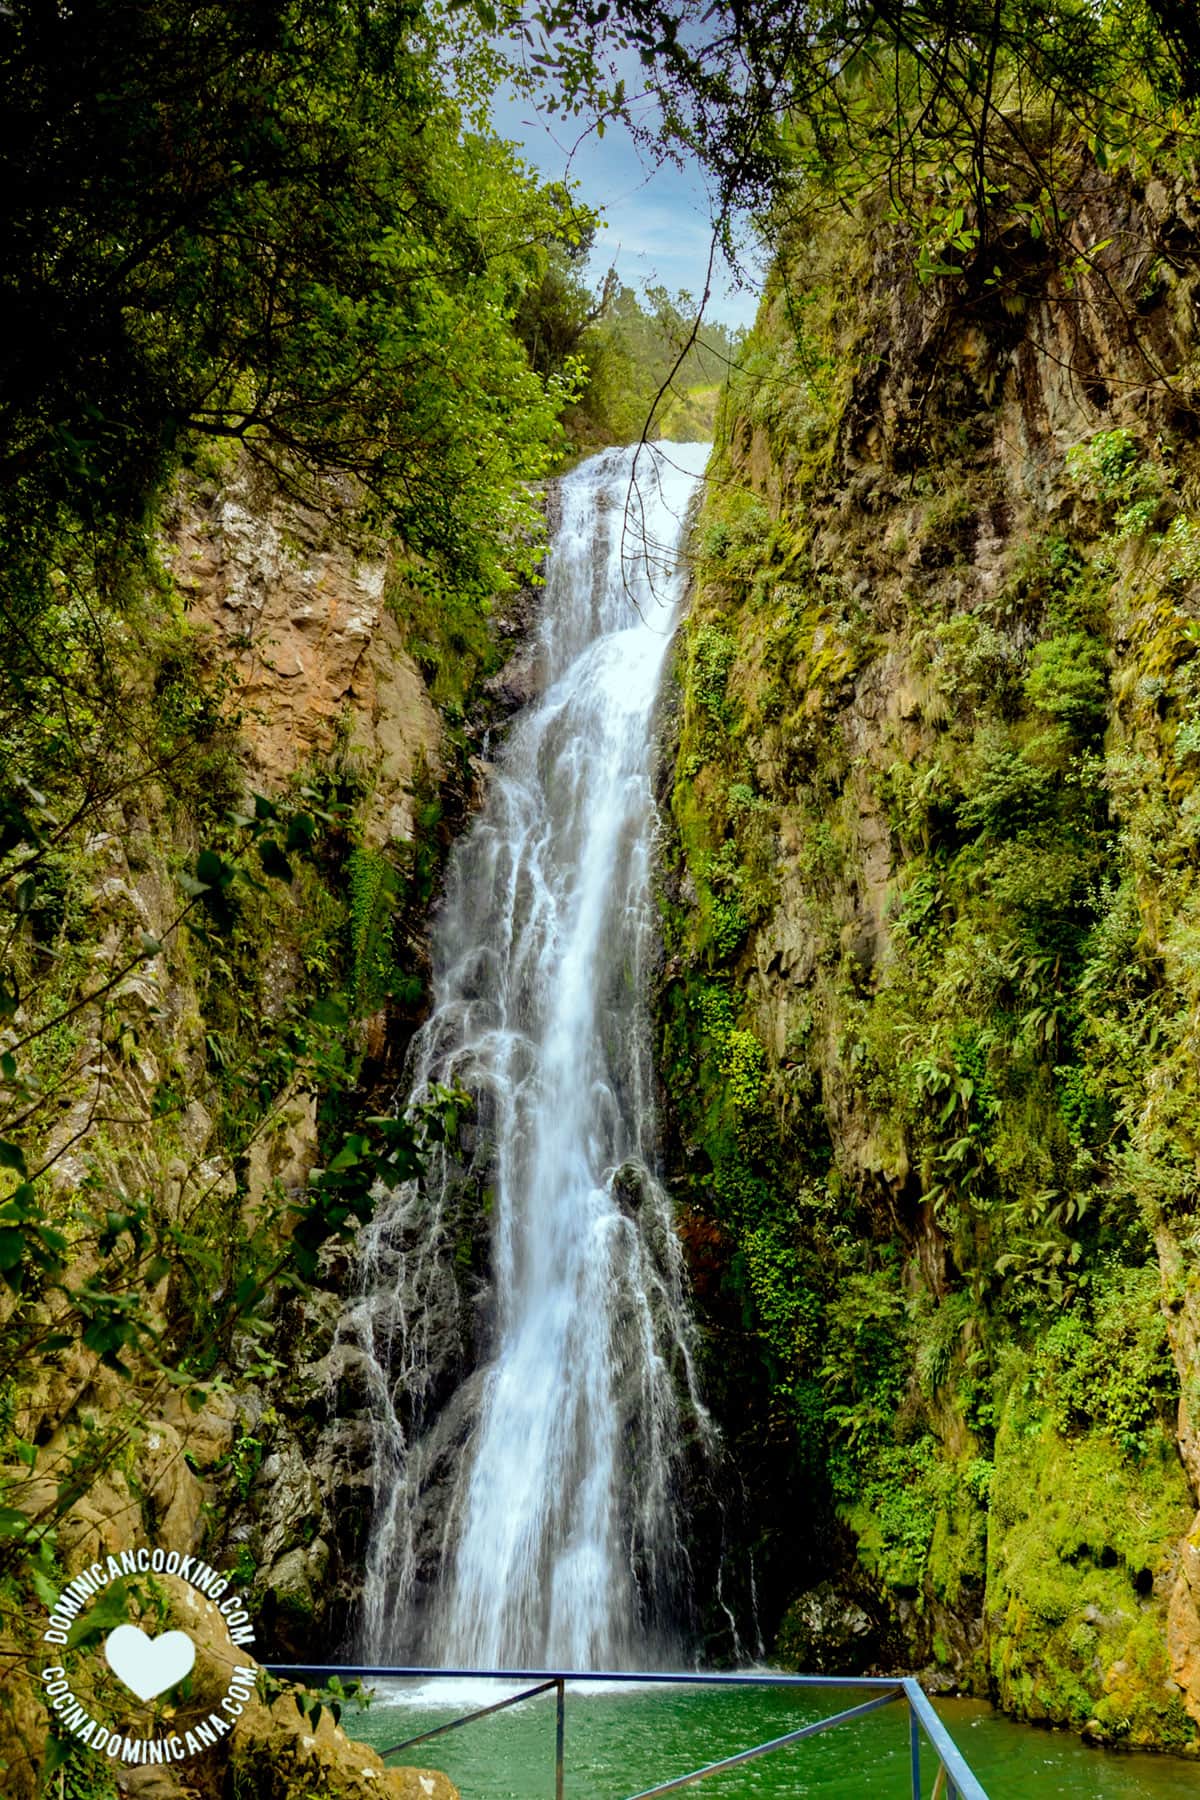 Aguas Blancas waterfall